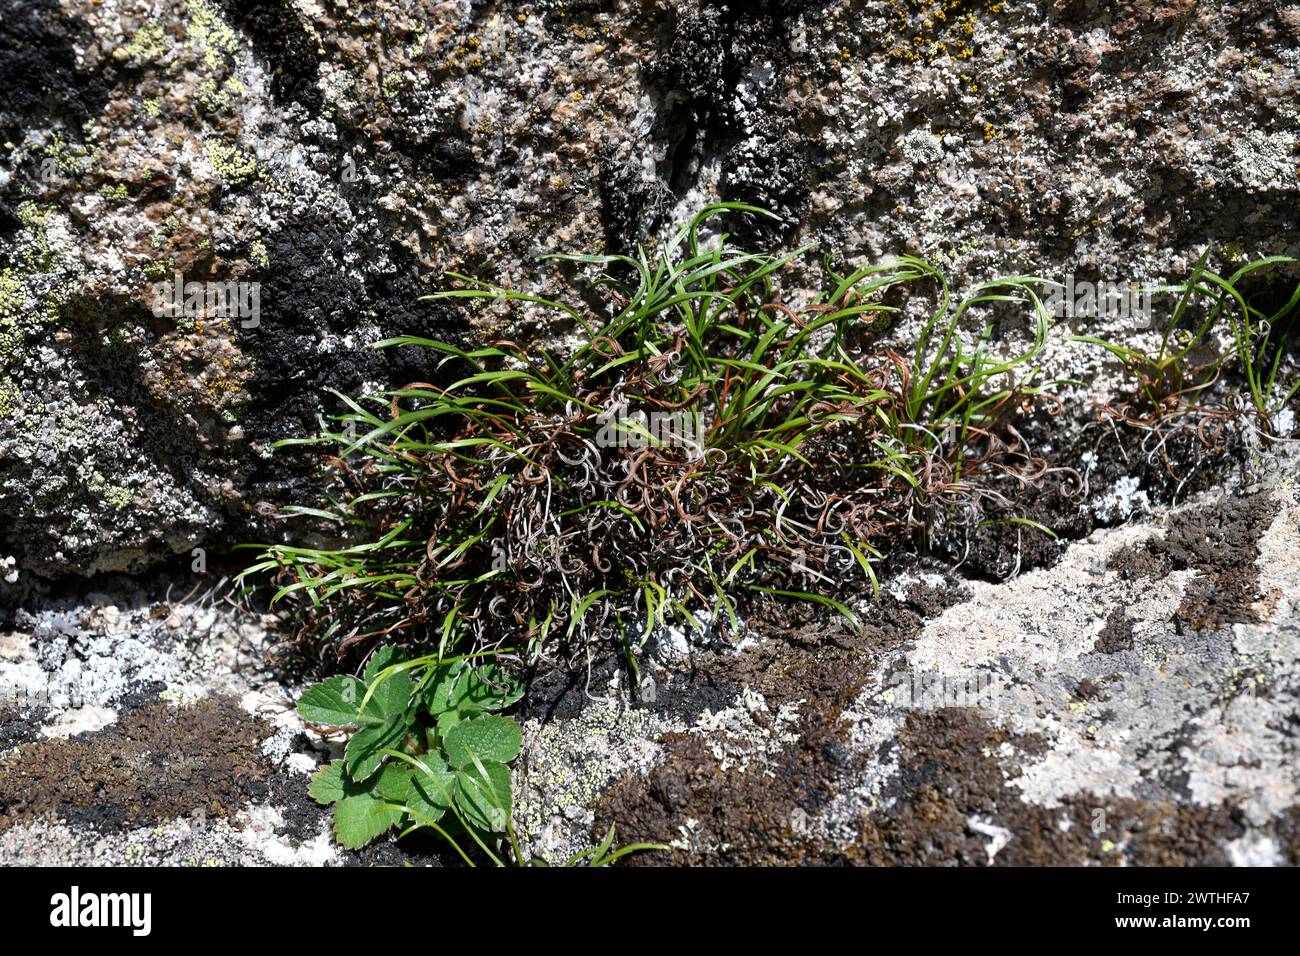 Forked spleenwort (Asplenium septentrionale) is a fern native to Eurasia. This photo was taken in Valle de Aran, Lleida, Catalonia, Spain. Stock Photo